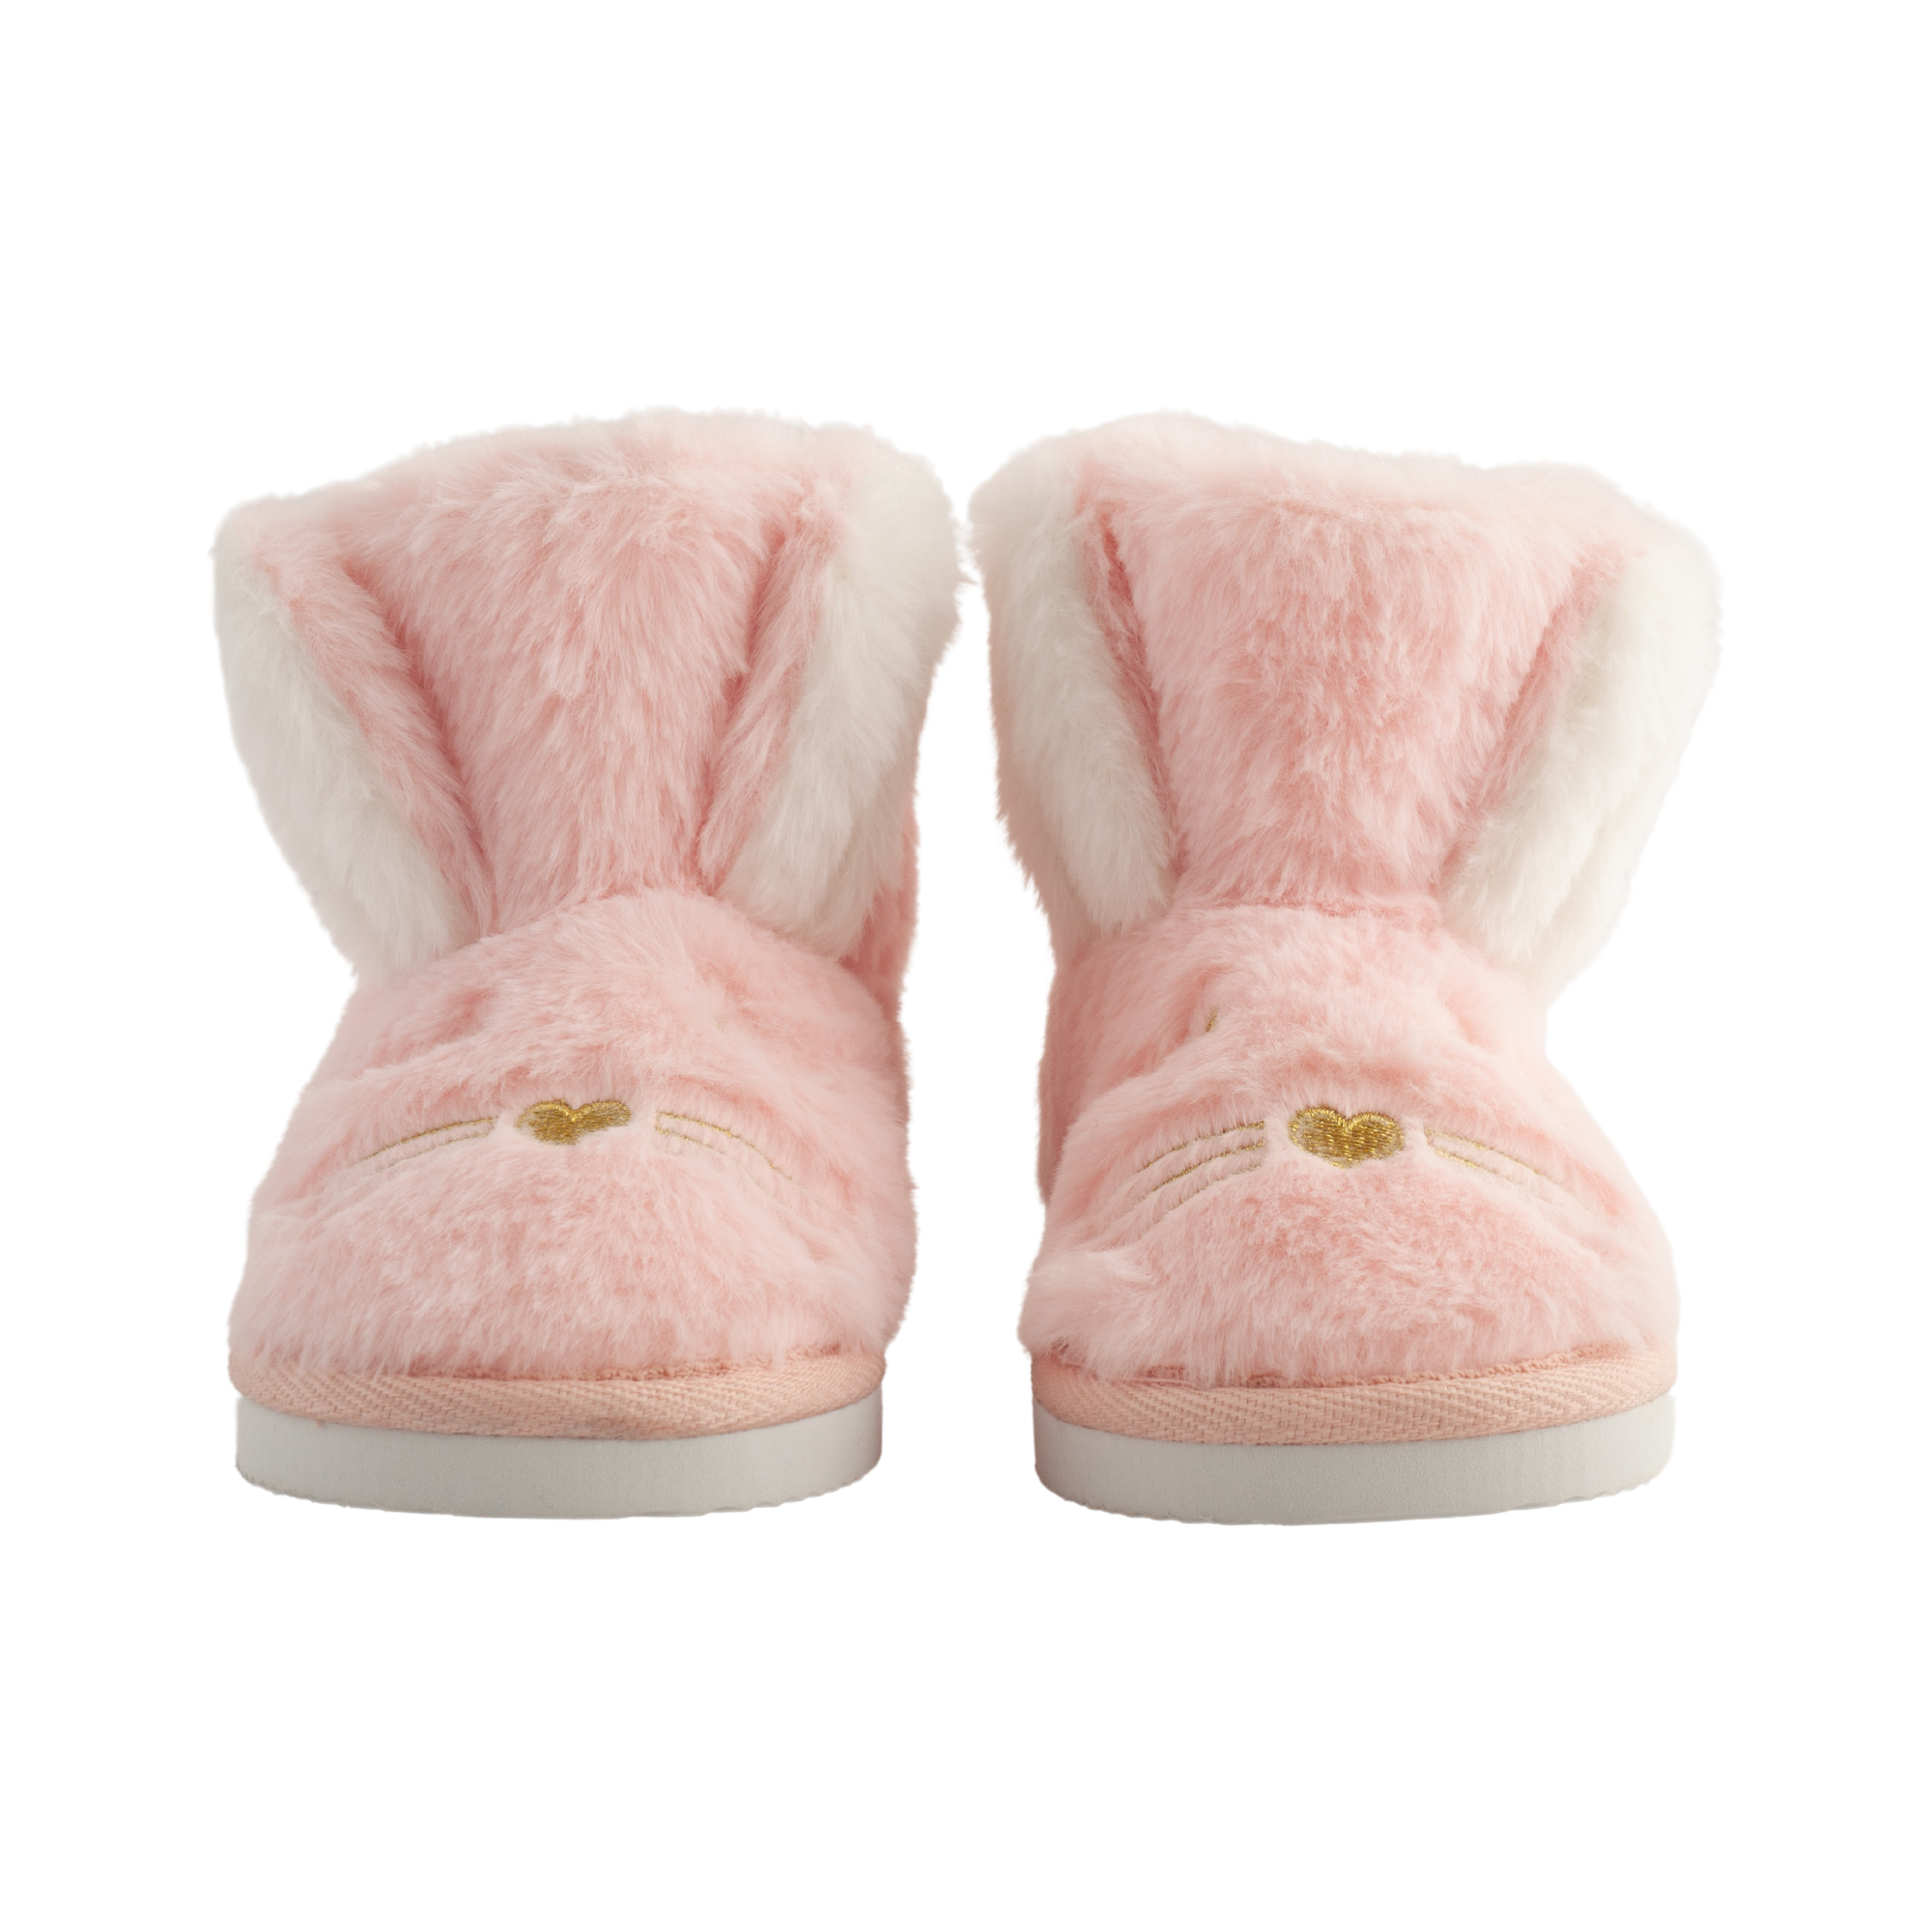 Novelty Slipper Boot - Pink Bunny Size 11-12